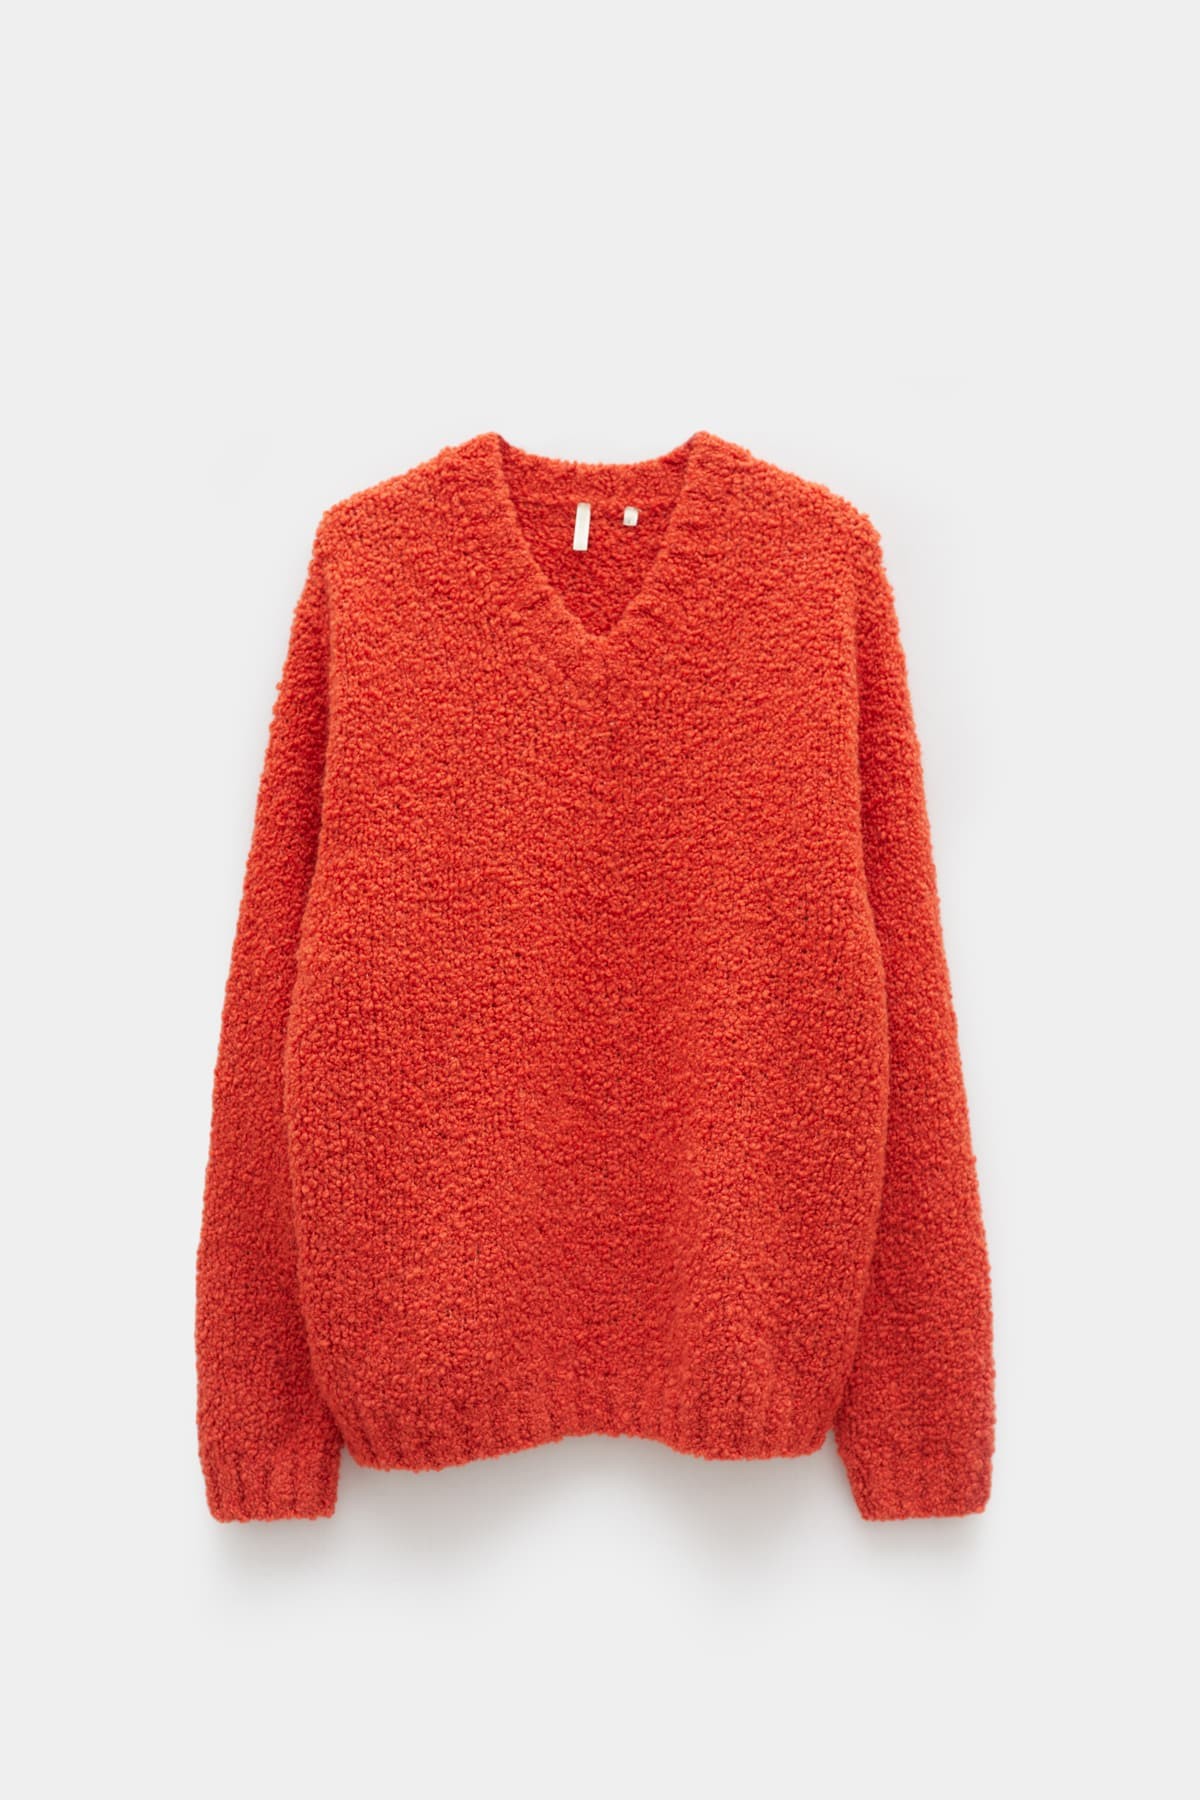 Pact Apparel Organic Cotton Fisherman Sweater In Burnt Orange Gingerbread  Large